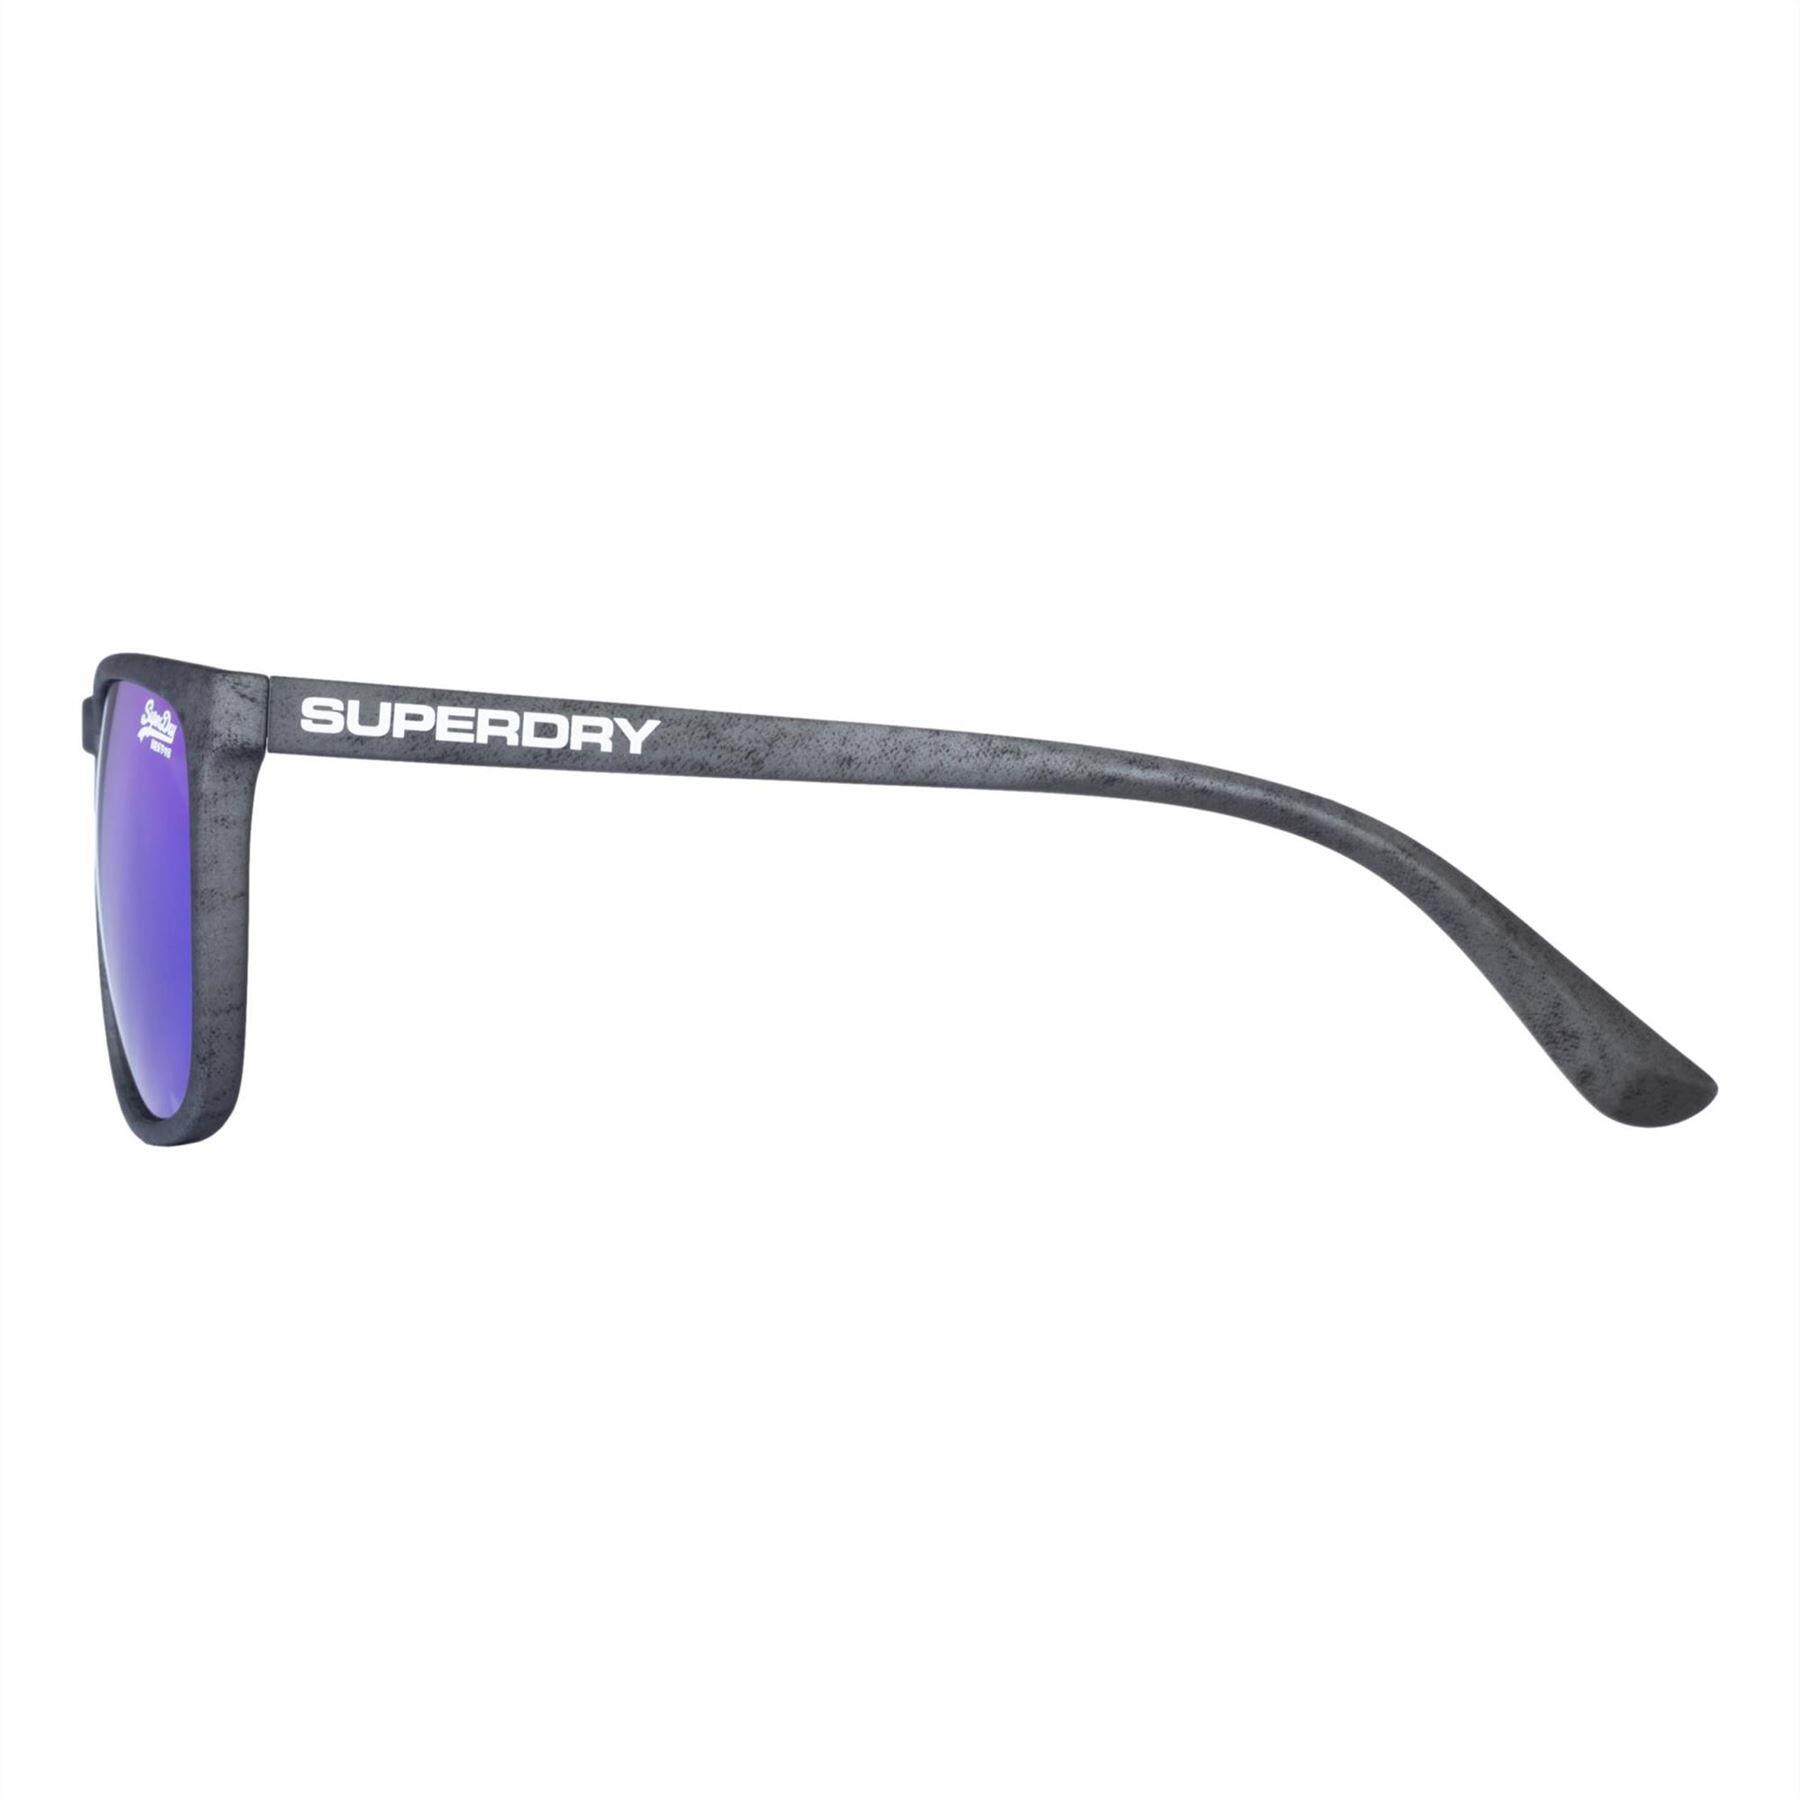 SUPERDRY Superdry Shockwave Sunglasses - Grey / Marl